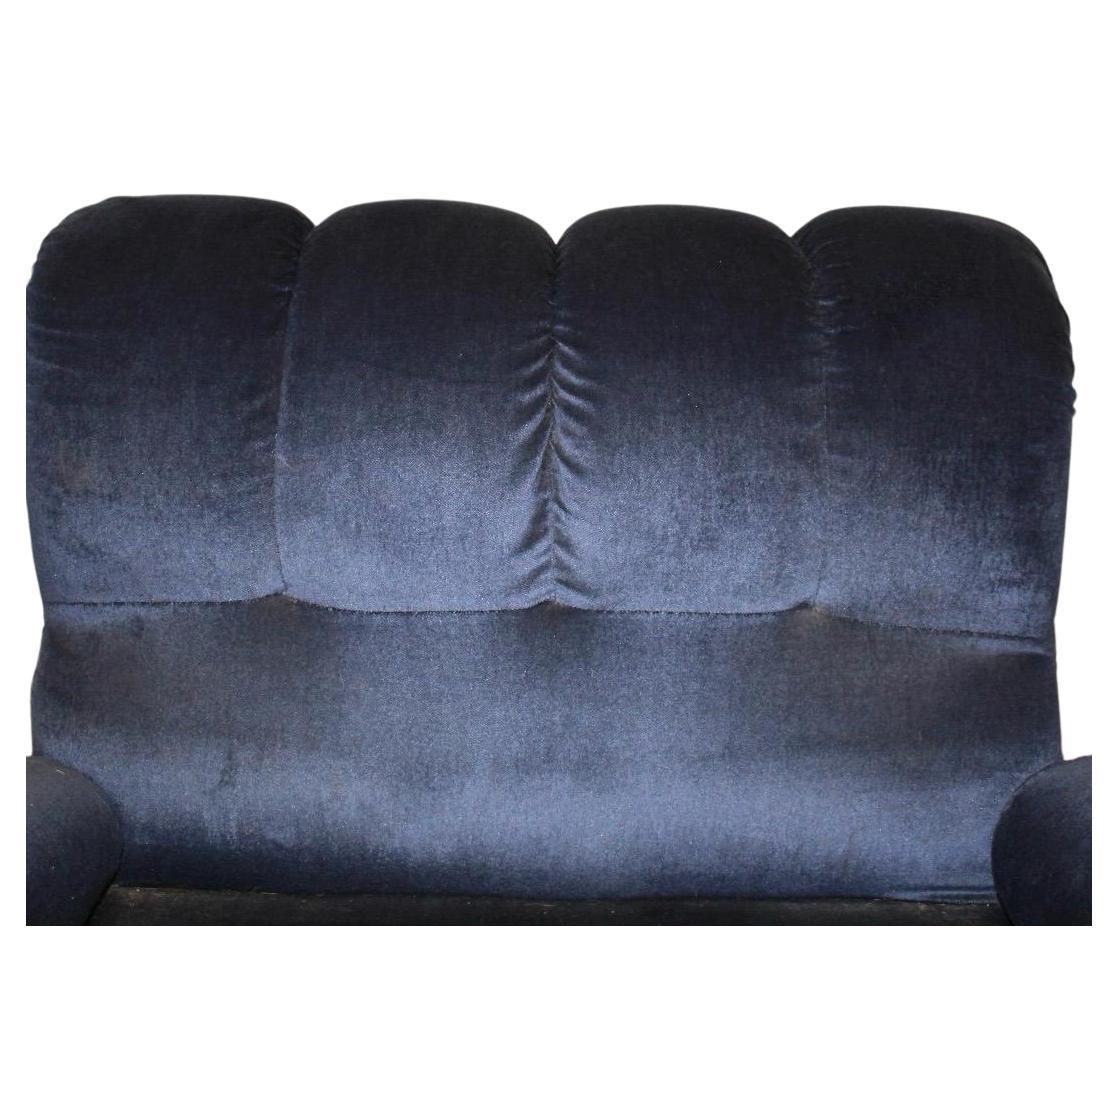 Midcentury Modern Blue Velvet Armchairs, Set of Two, Italy 1980s For Sale 6